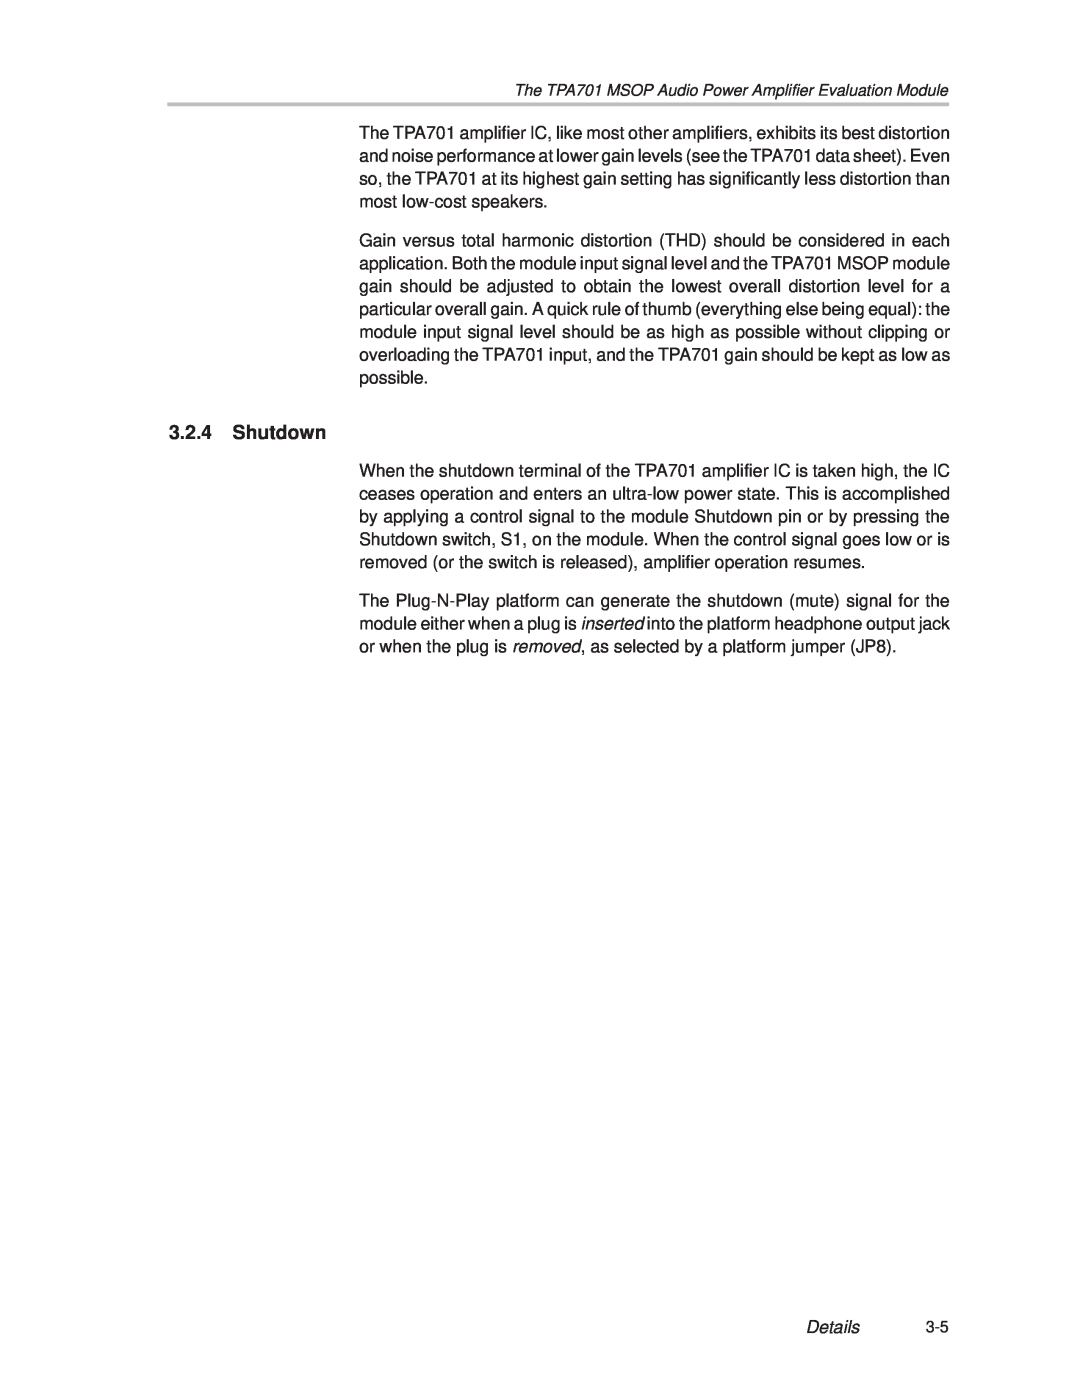 Texas Instruments TPA701 manual 3.2.4Shutdown, Details 